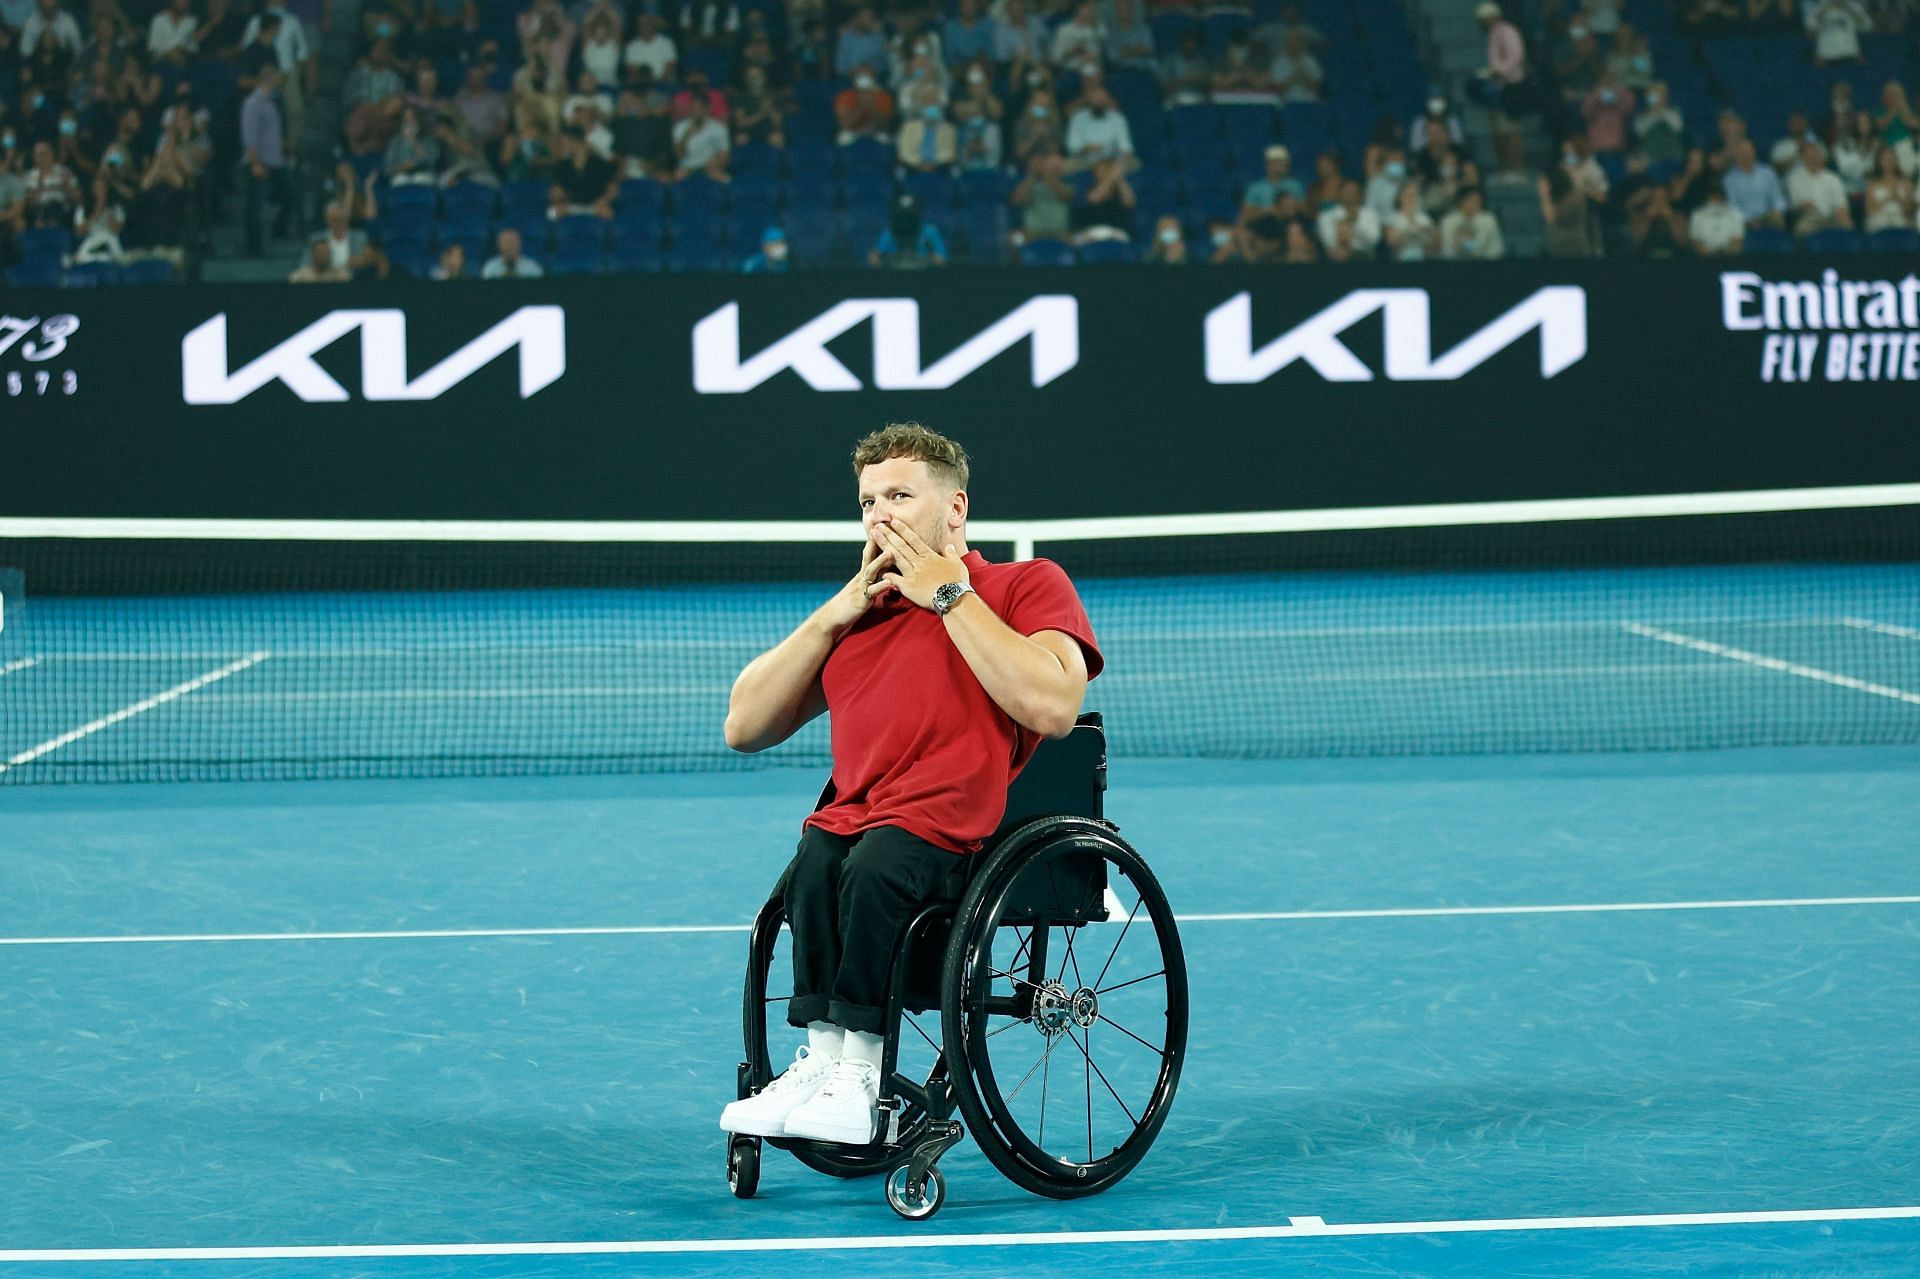 The Australian retires as an icon of wheelchair tennis